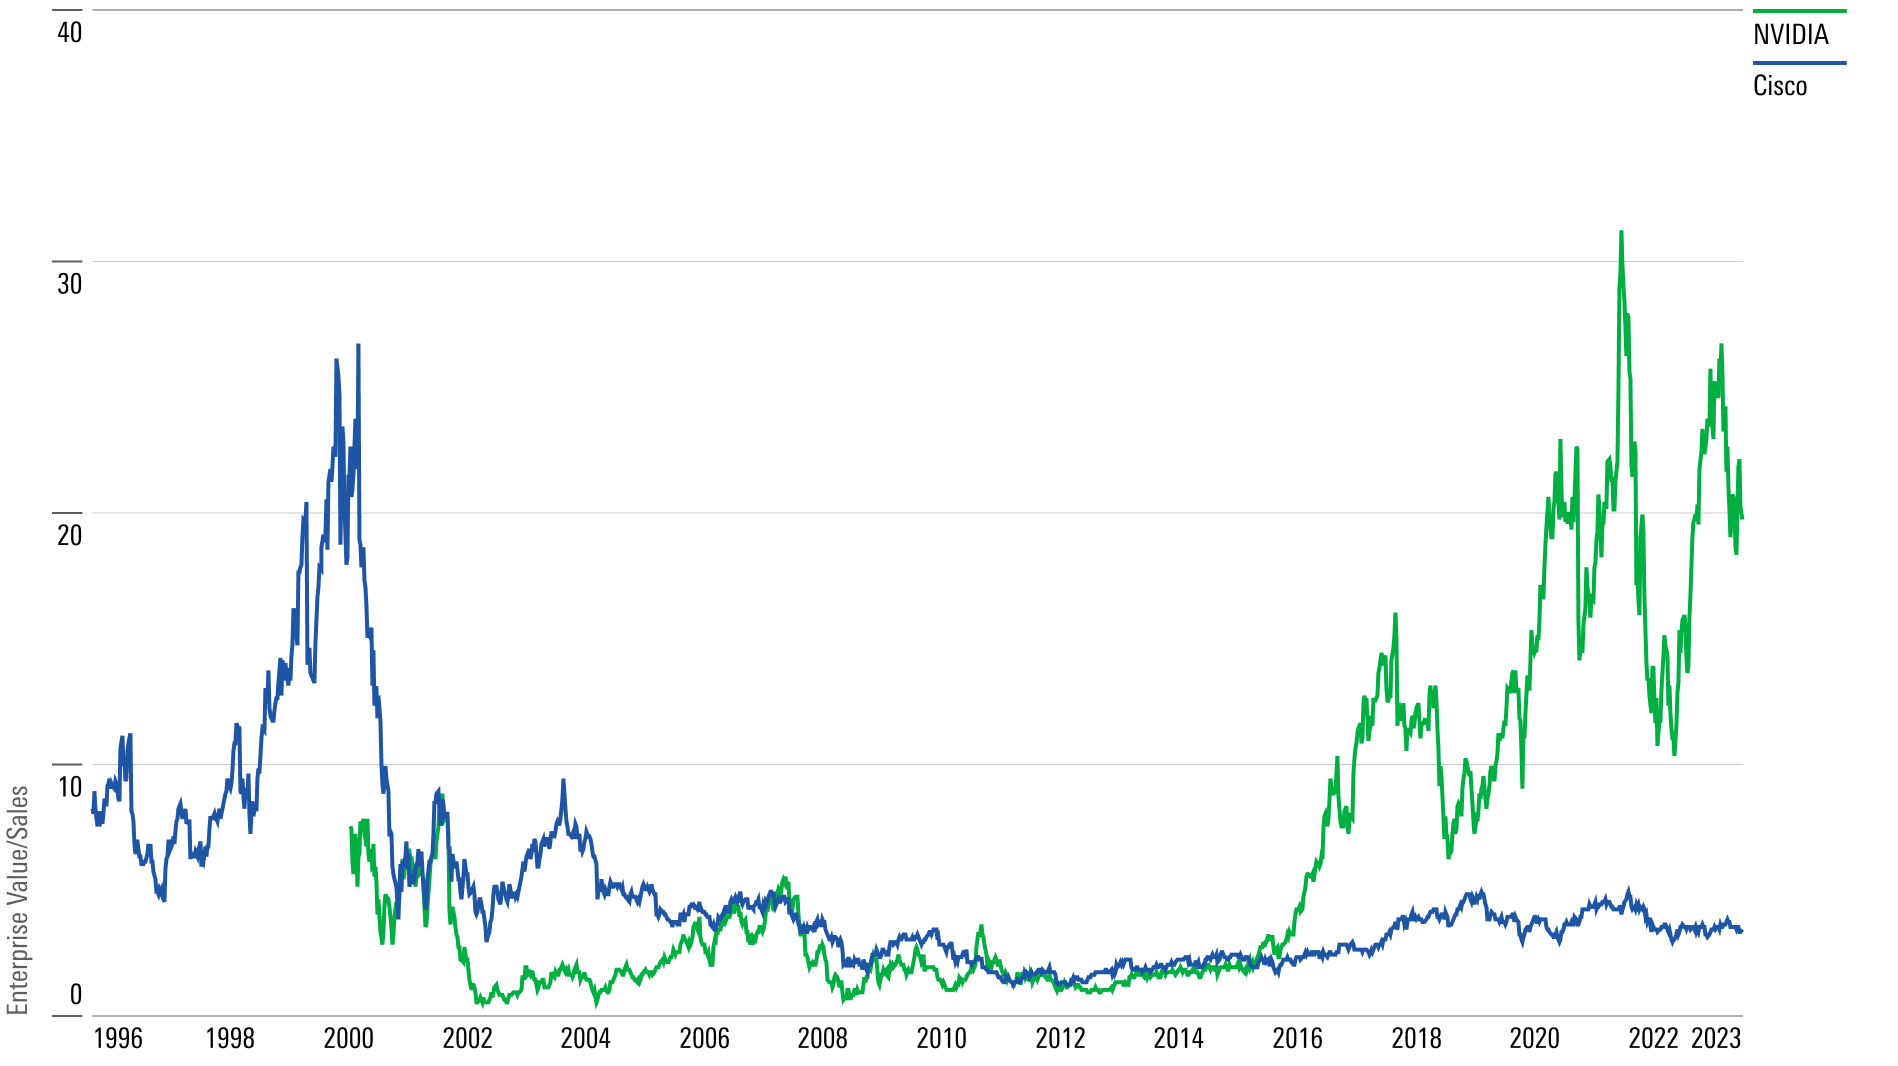 line chart showing enterprise value/sales ratio of Nvidia vs. Cisco stock since 1996